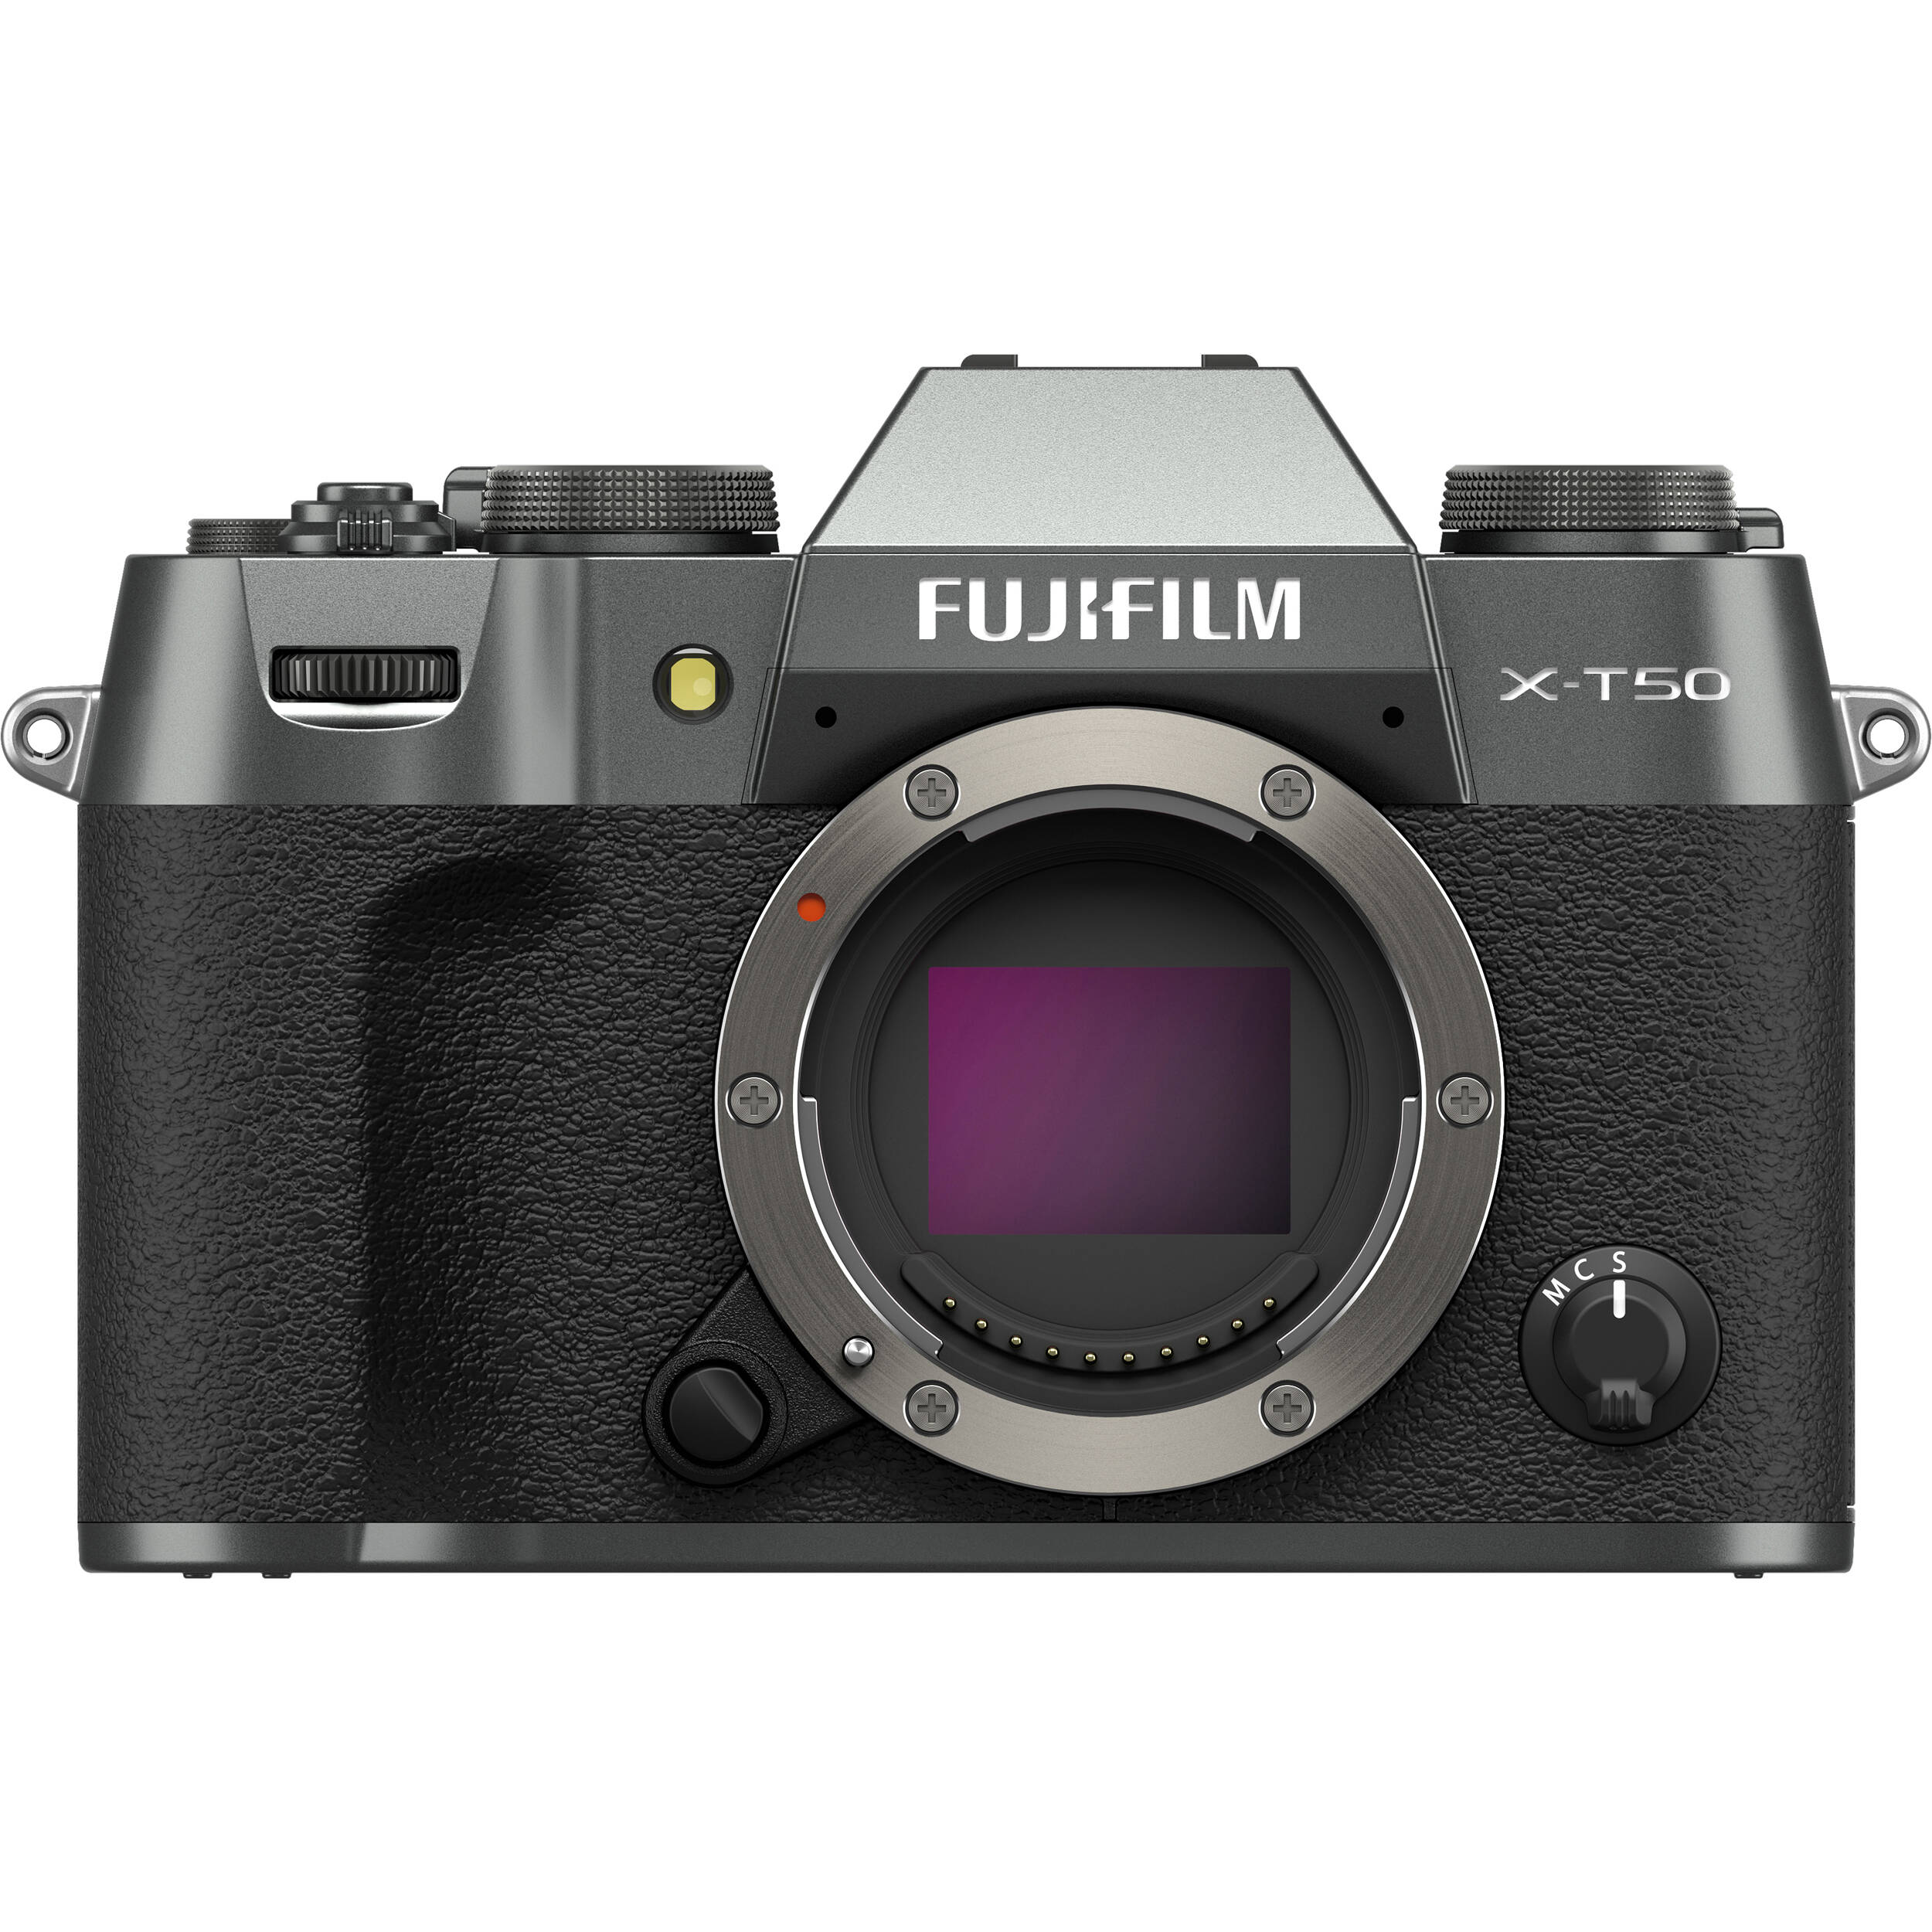 Fujifilm X-T50 Mirrorless Camera Body (Charcoal Silver)